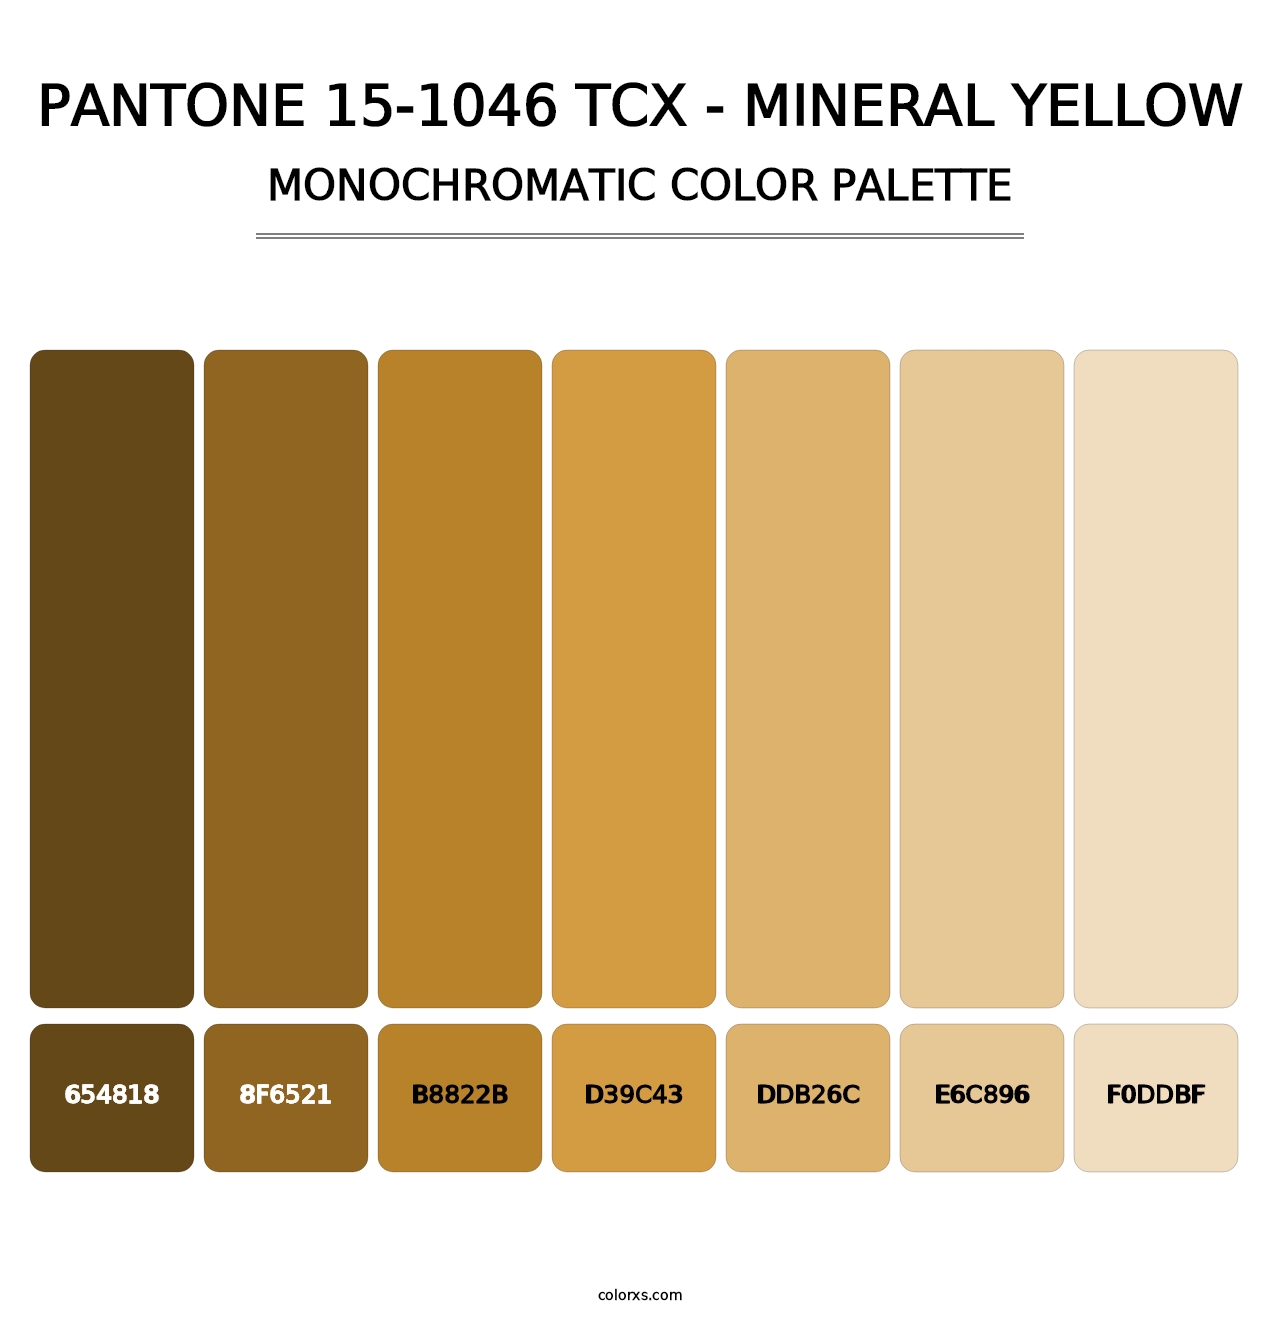 PANTONE 15-1046 TCX - Mineral Yellow - Monochromatic Color Palette